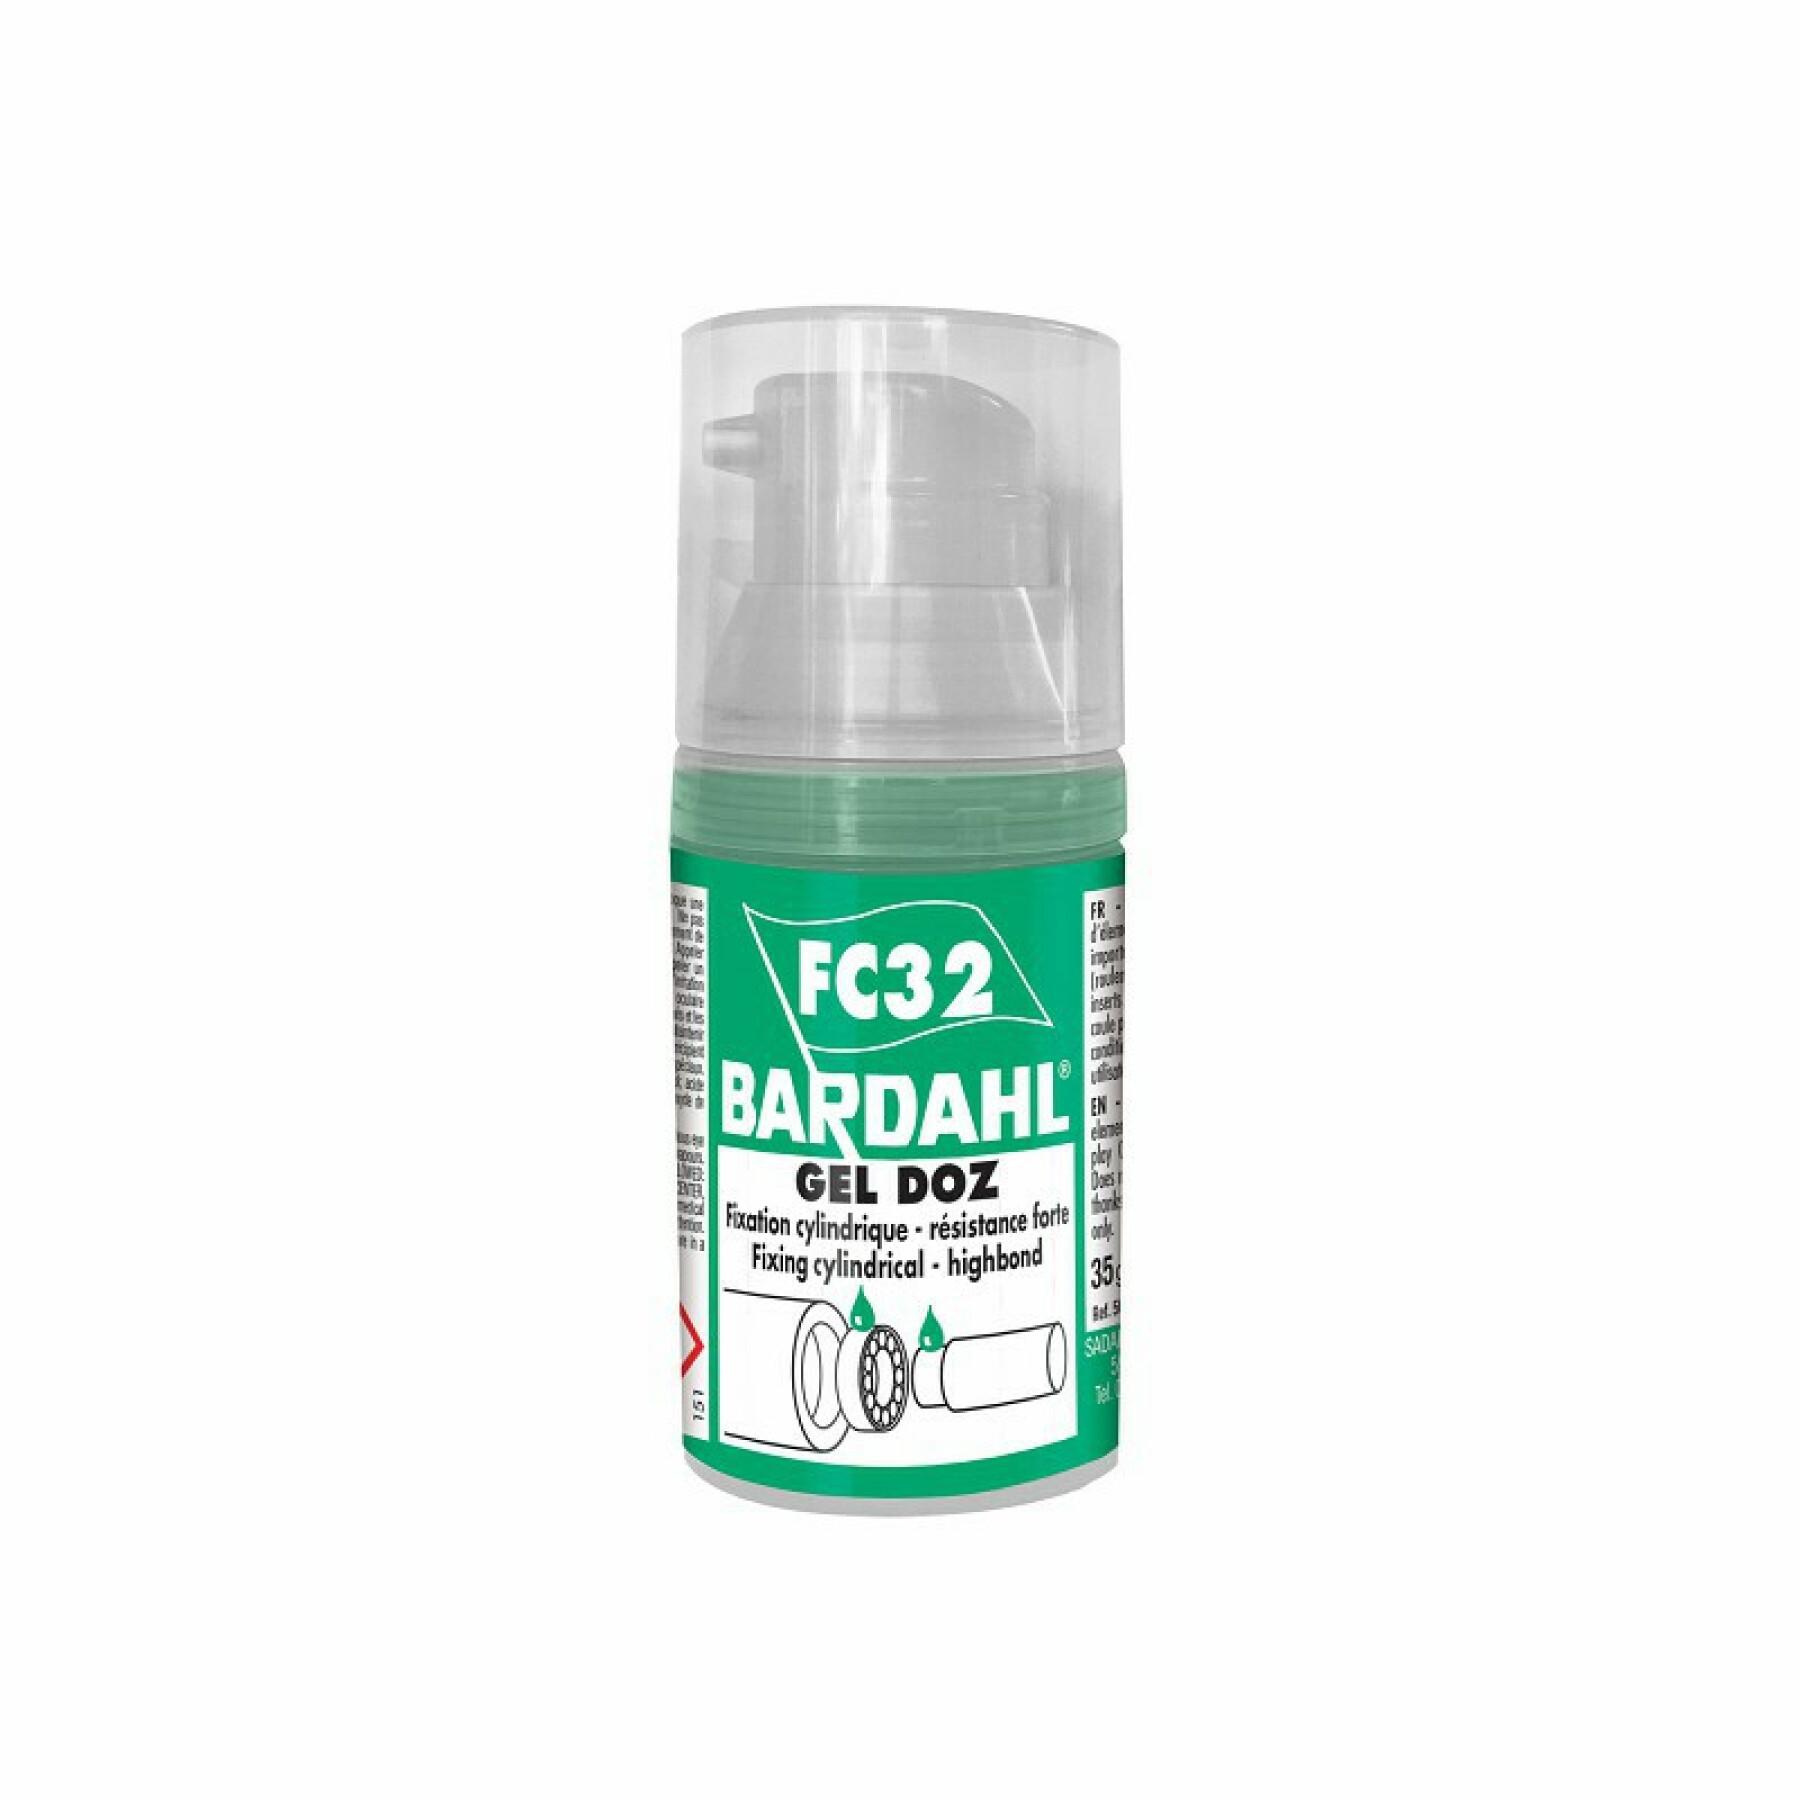 Cilindro adhesivo fijo resistente a la bomba Bardahl Geldoz Fc32 35 g